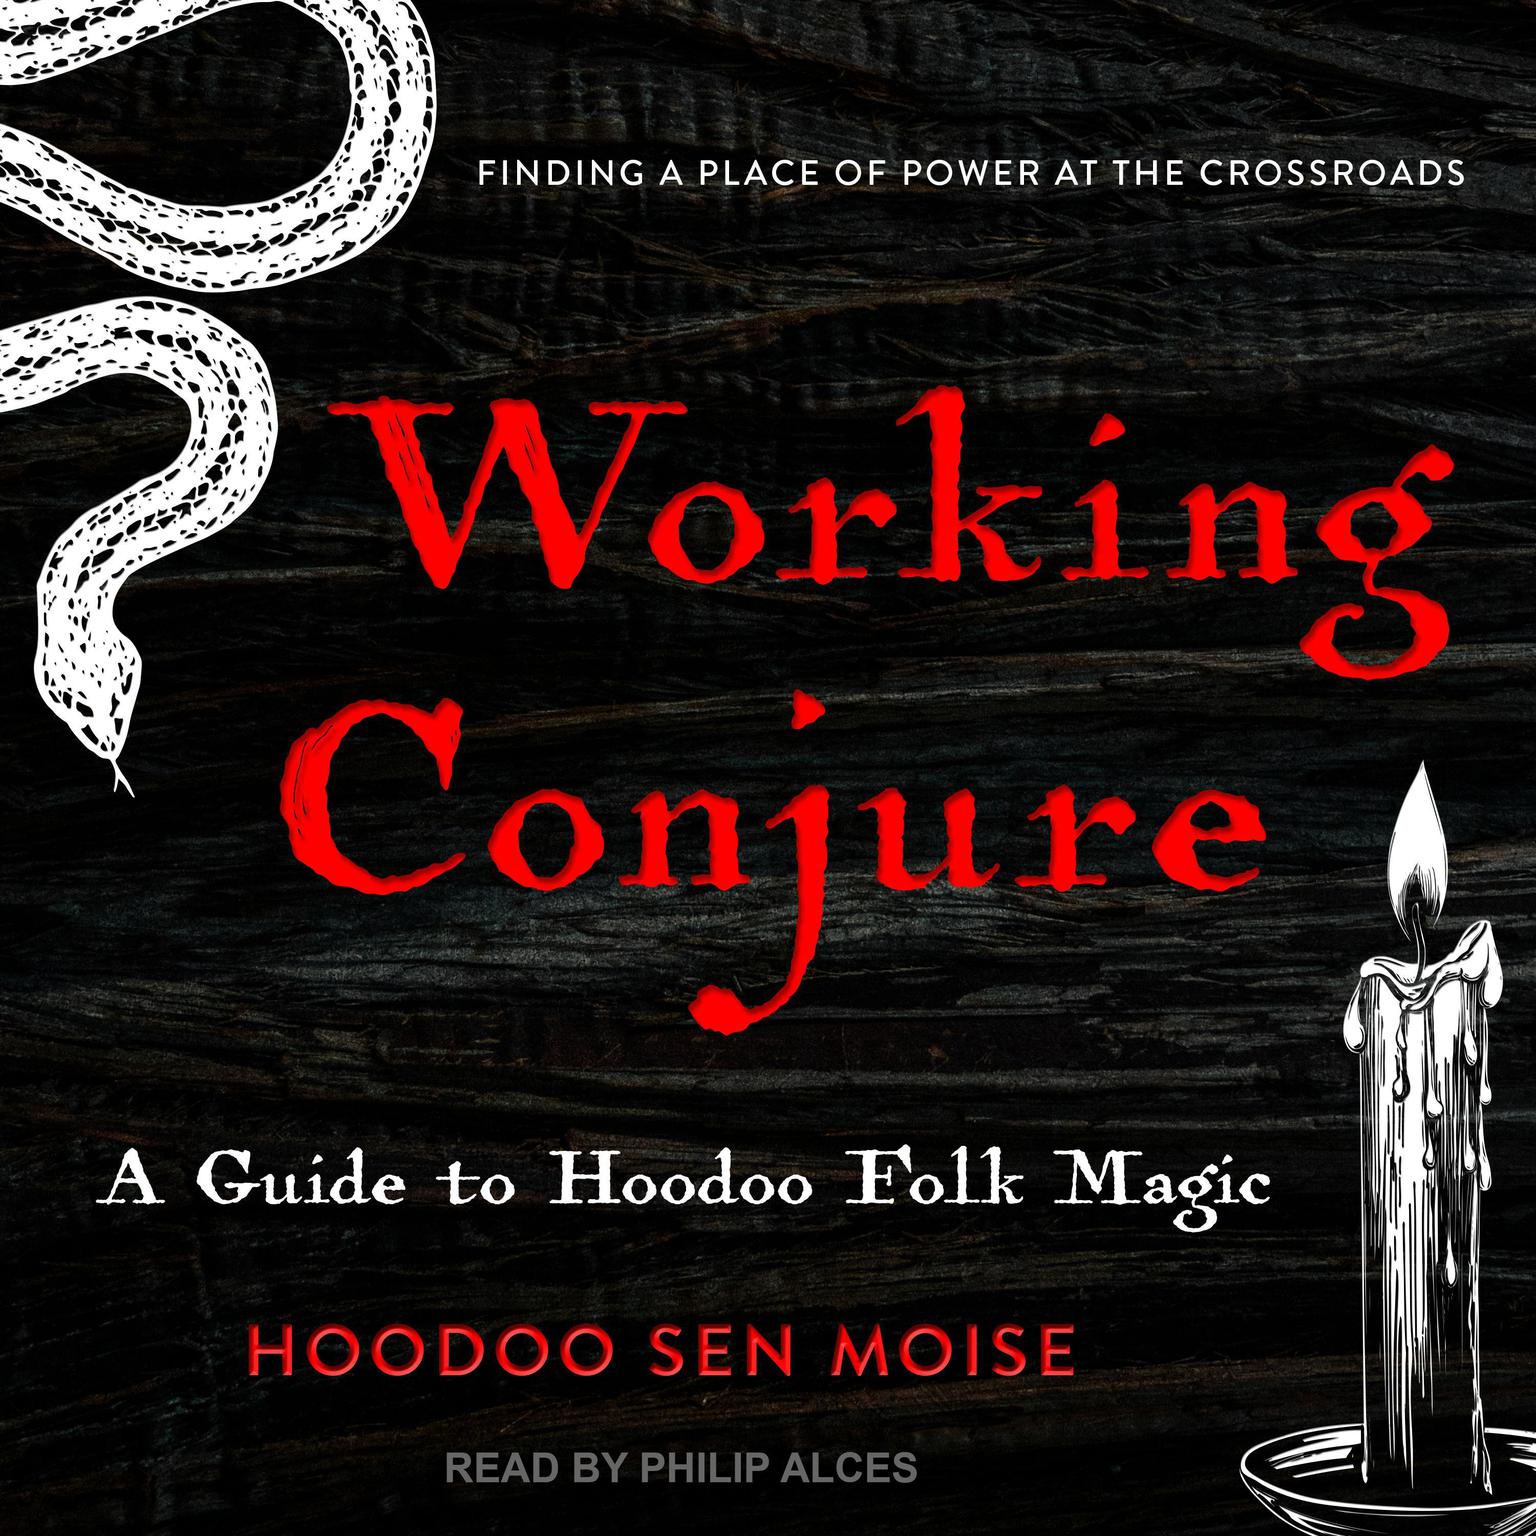 Working Conjure: A Guide to Hoodoo Folk Magic Audiobook, by Hoodoo Sen Moise